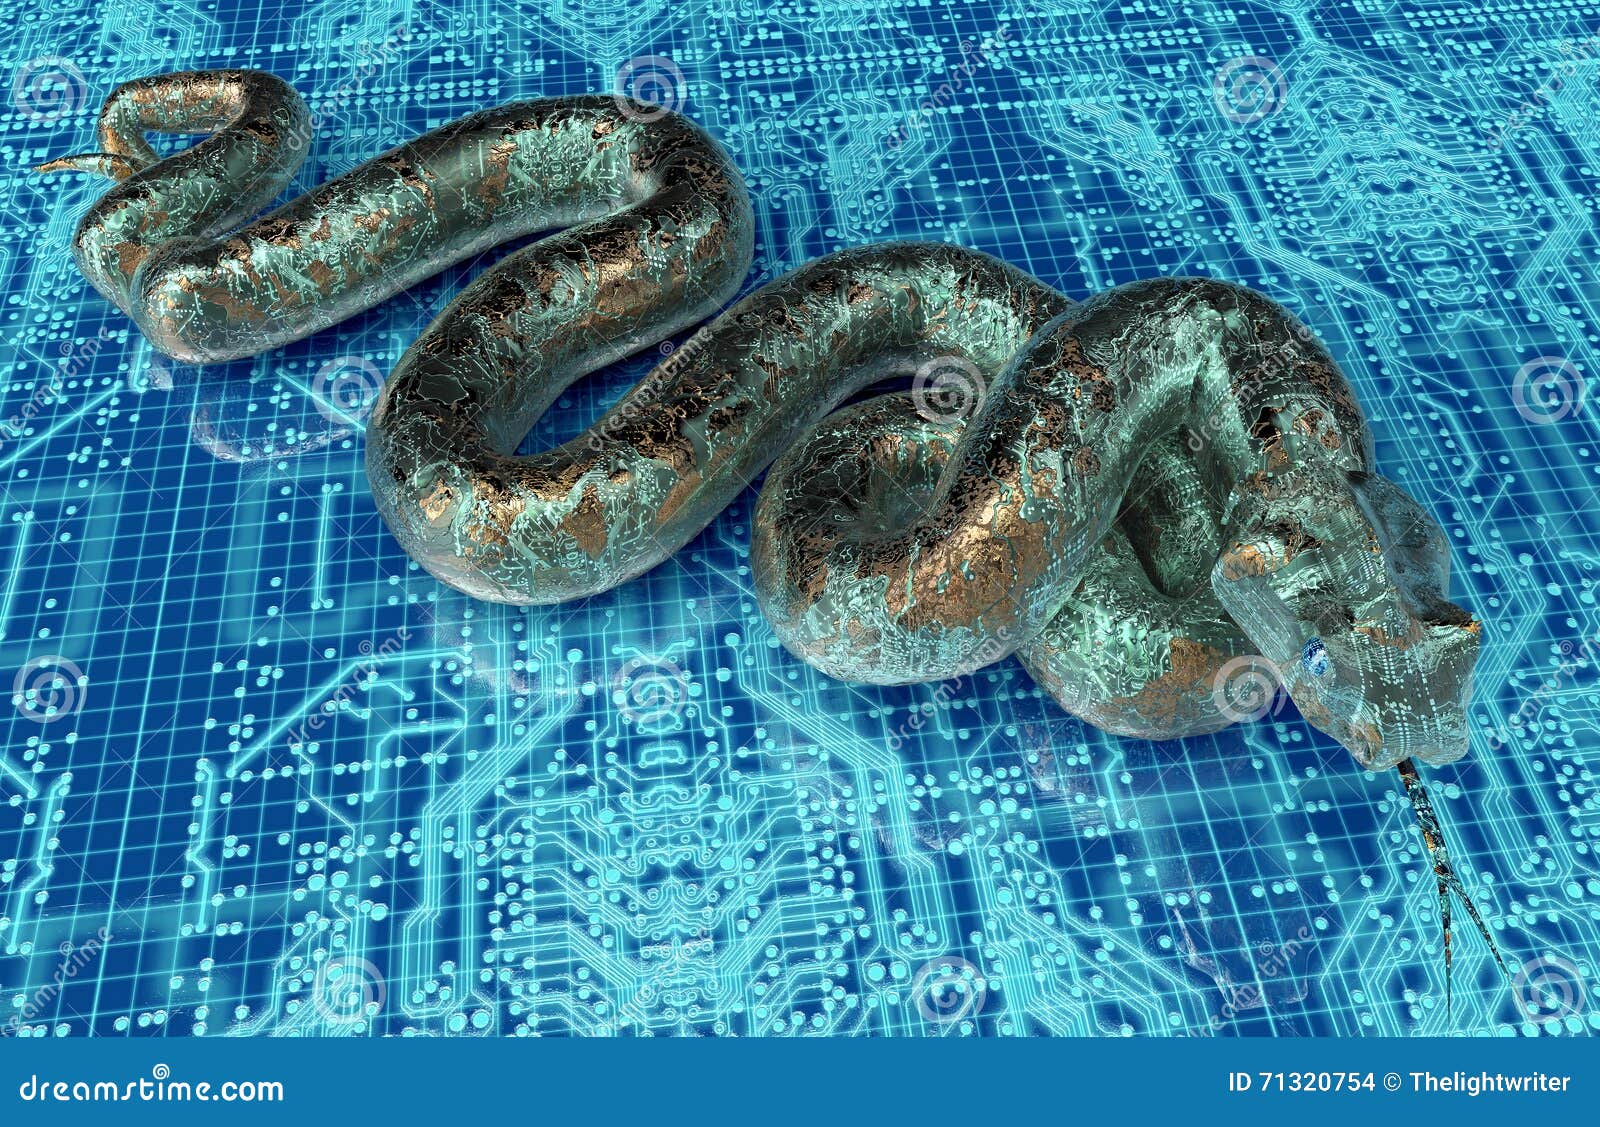 Snake 3d illustration Stock Photo by ©julos 4397060